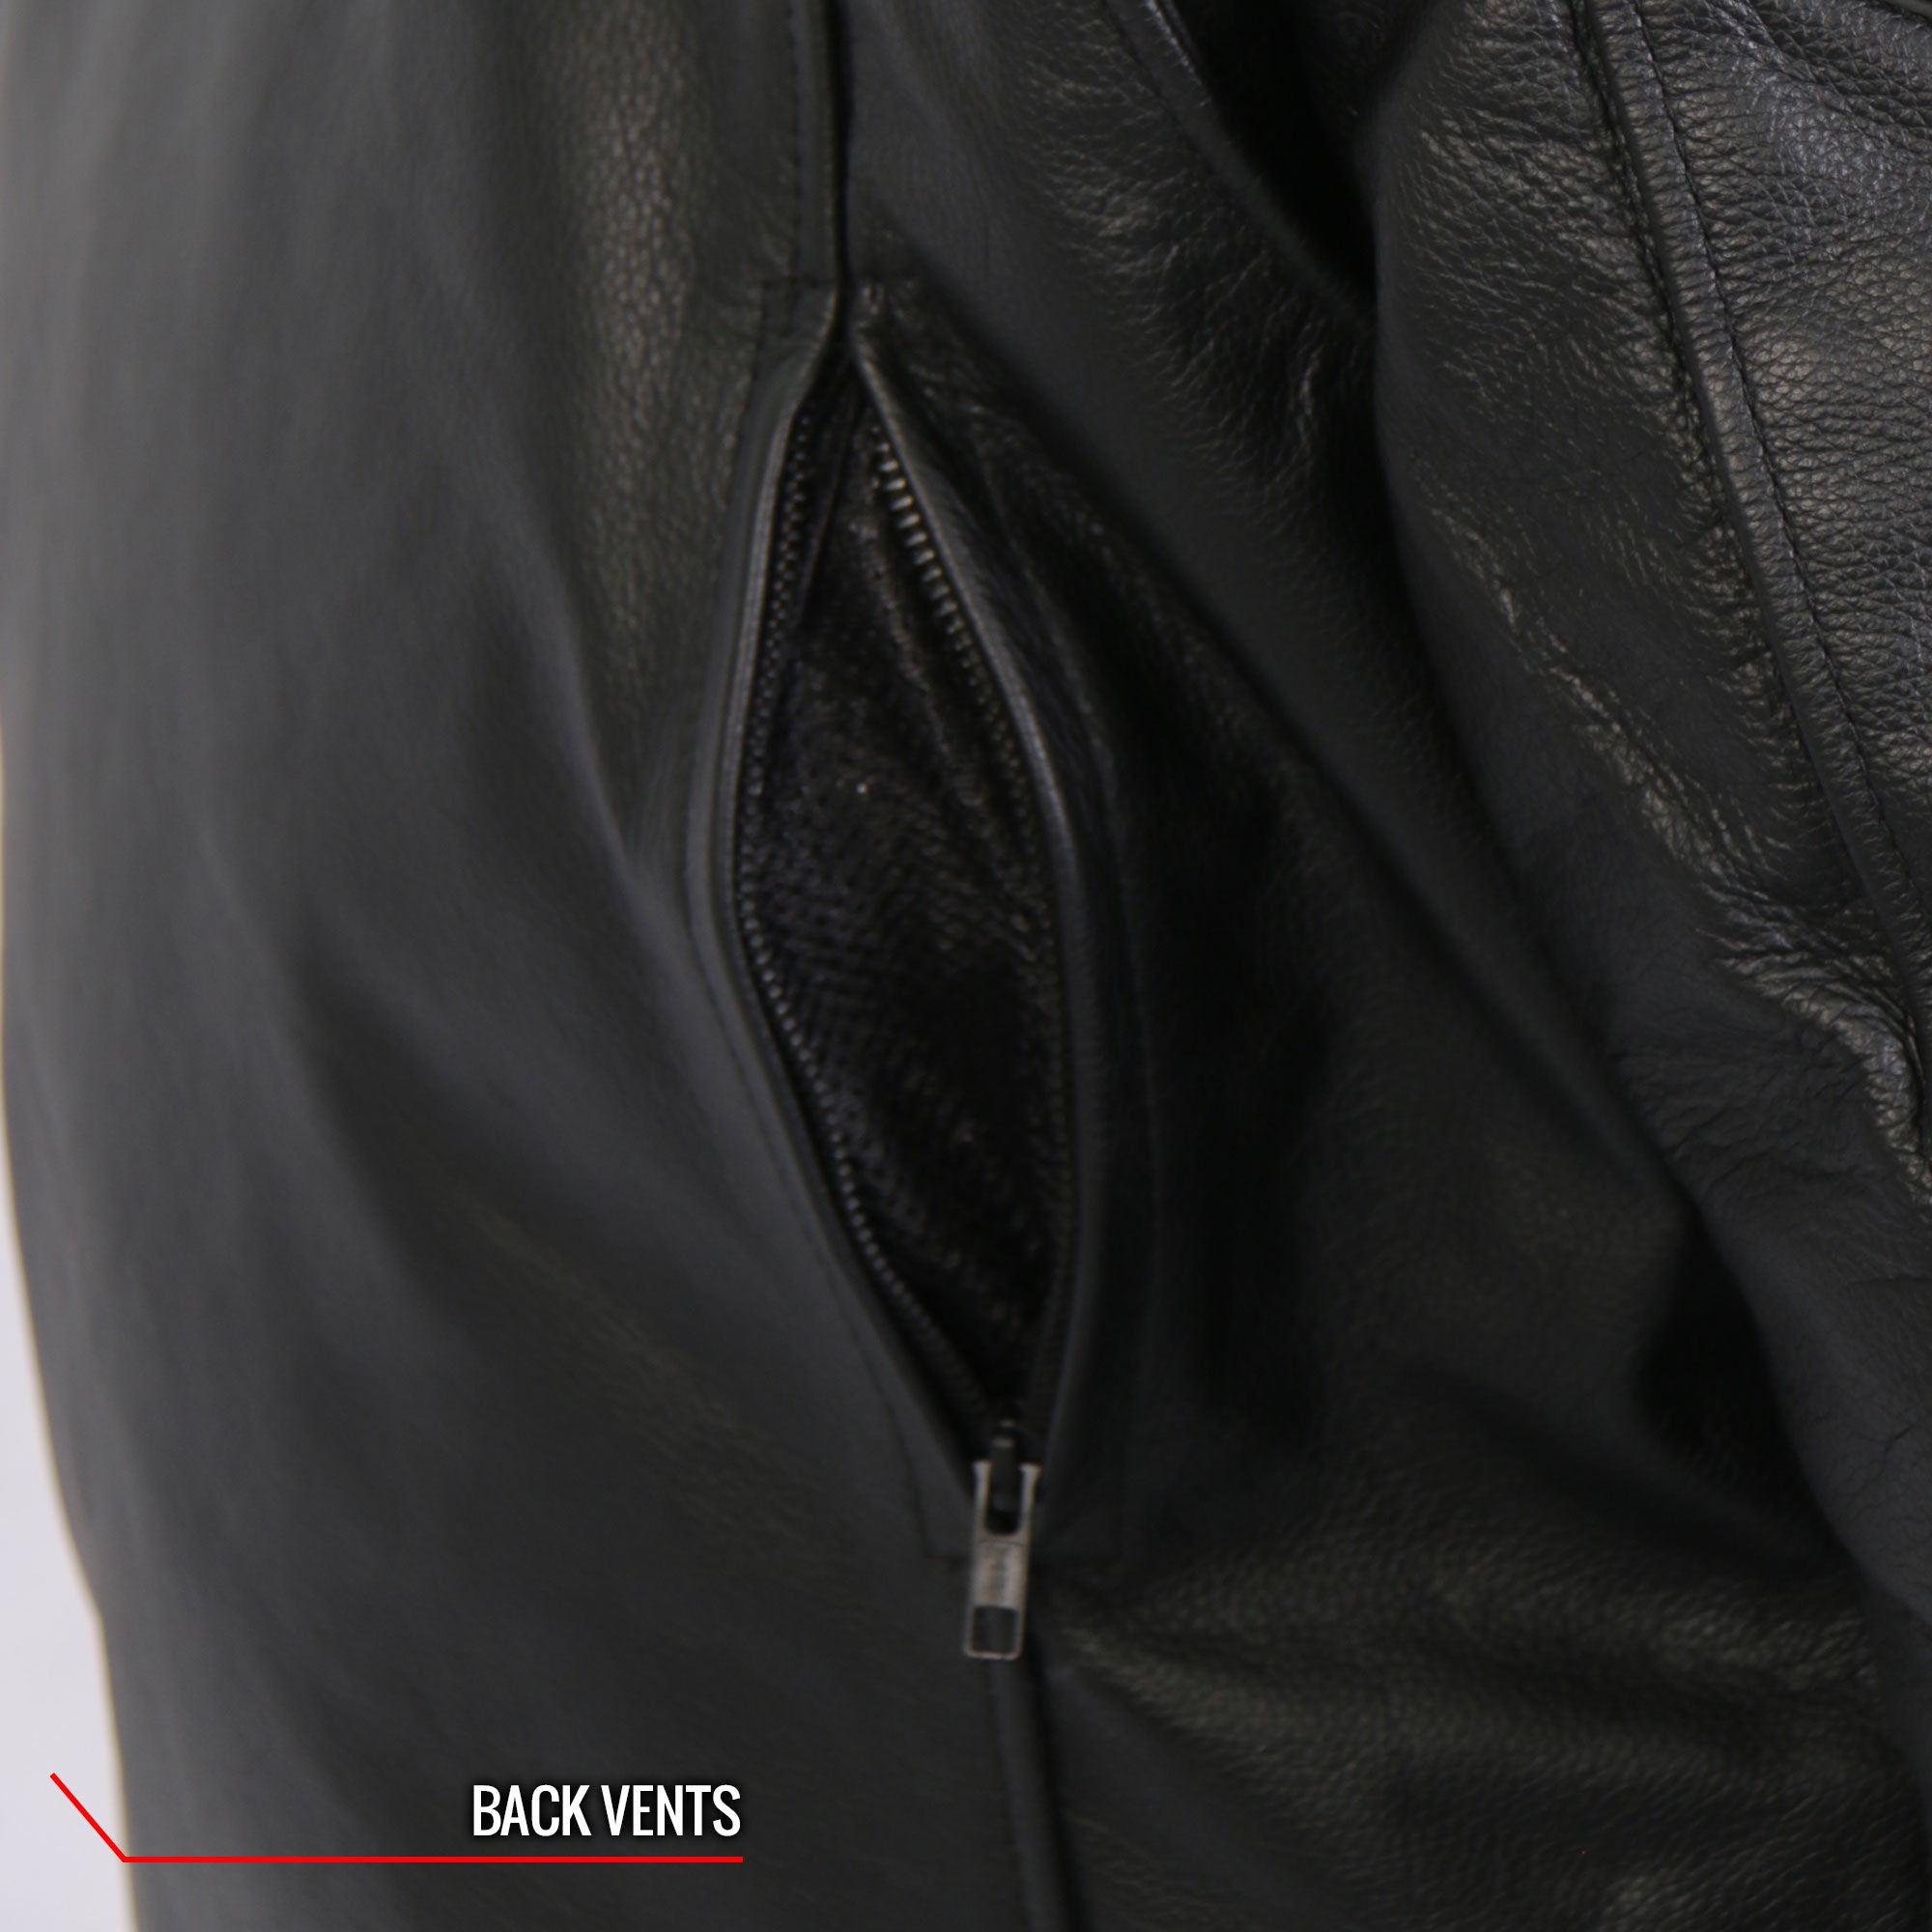 Hot Leathers JKM1032 Men’s Motorcycle Black ‘Skull Flag' Printed Leather Biker Jacket with Concealed Carry Pockets